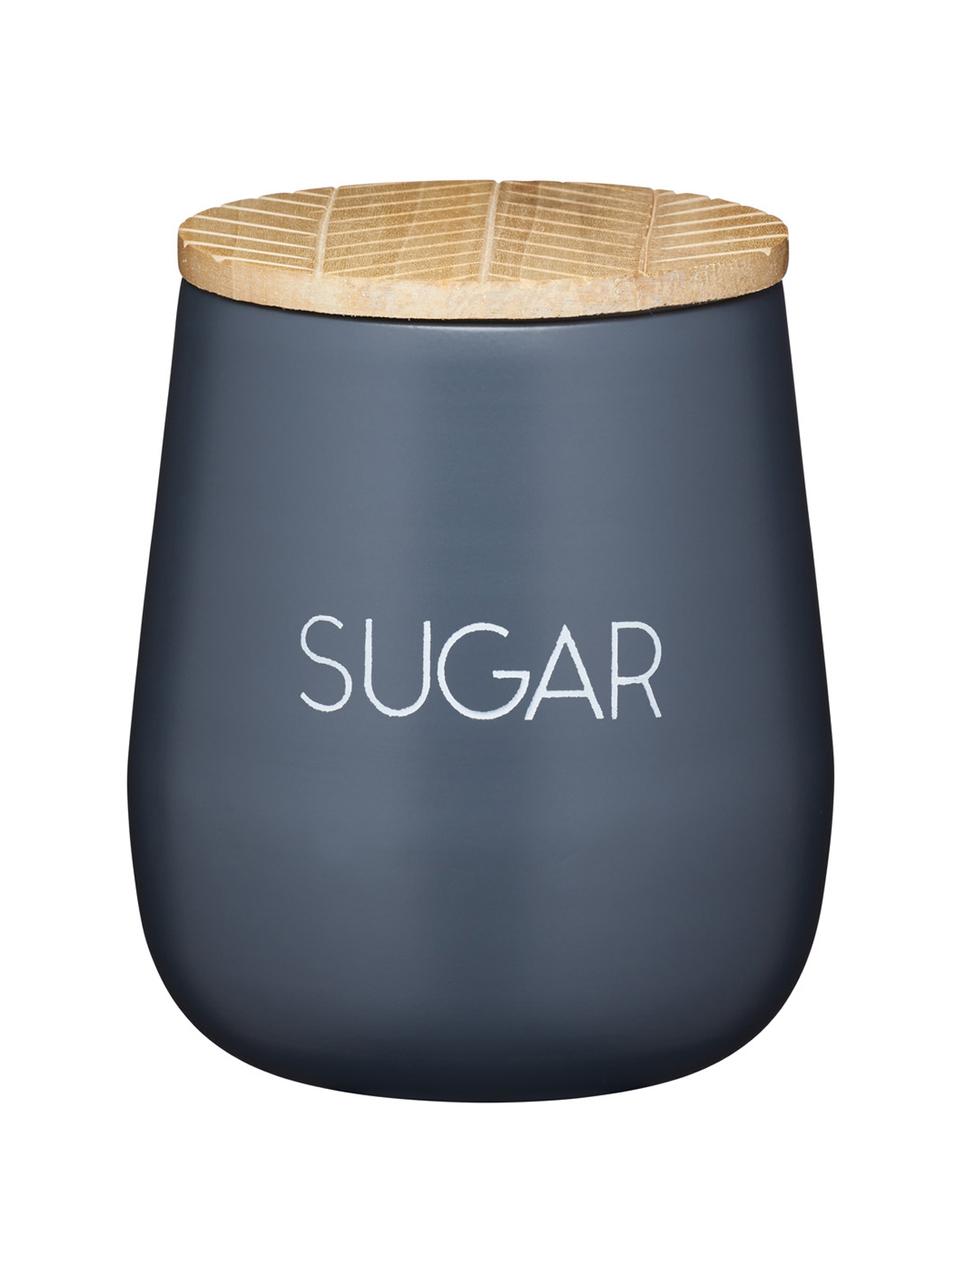 Opbergpot Serenity Sugar, Staal, hout, Antraciet, houtkleurig, Ø 13 x H 15 cm, 1,6 L